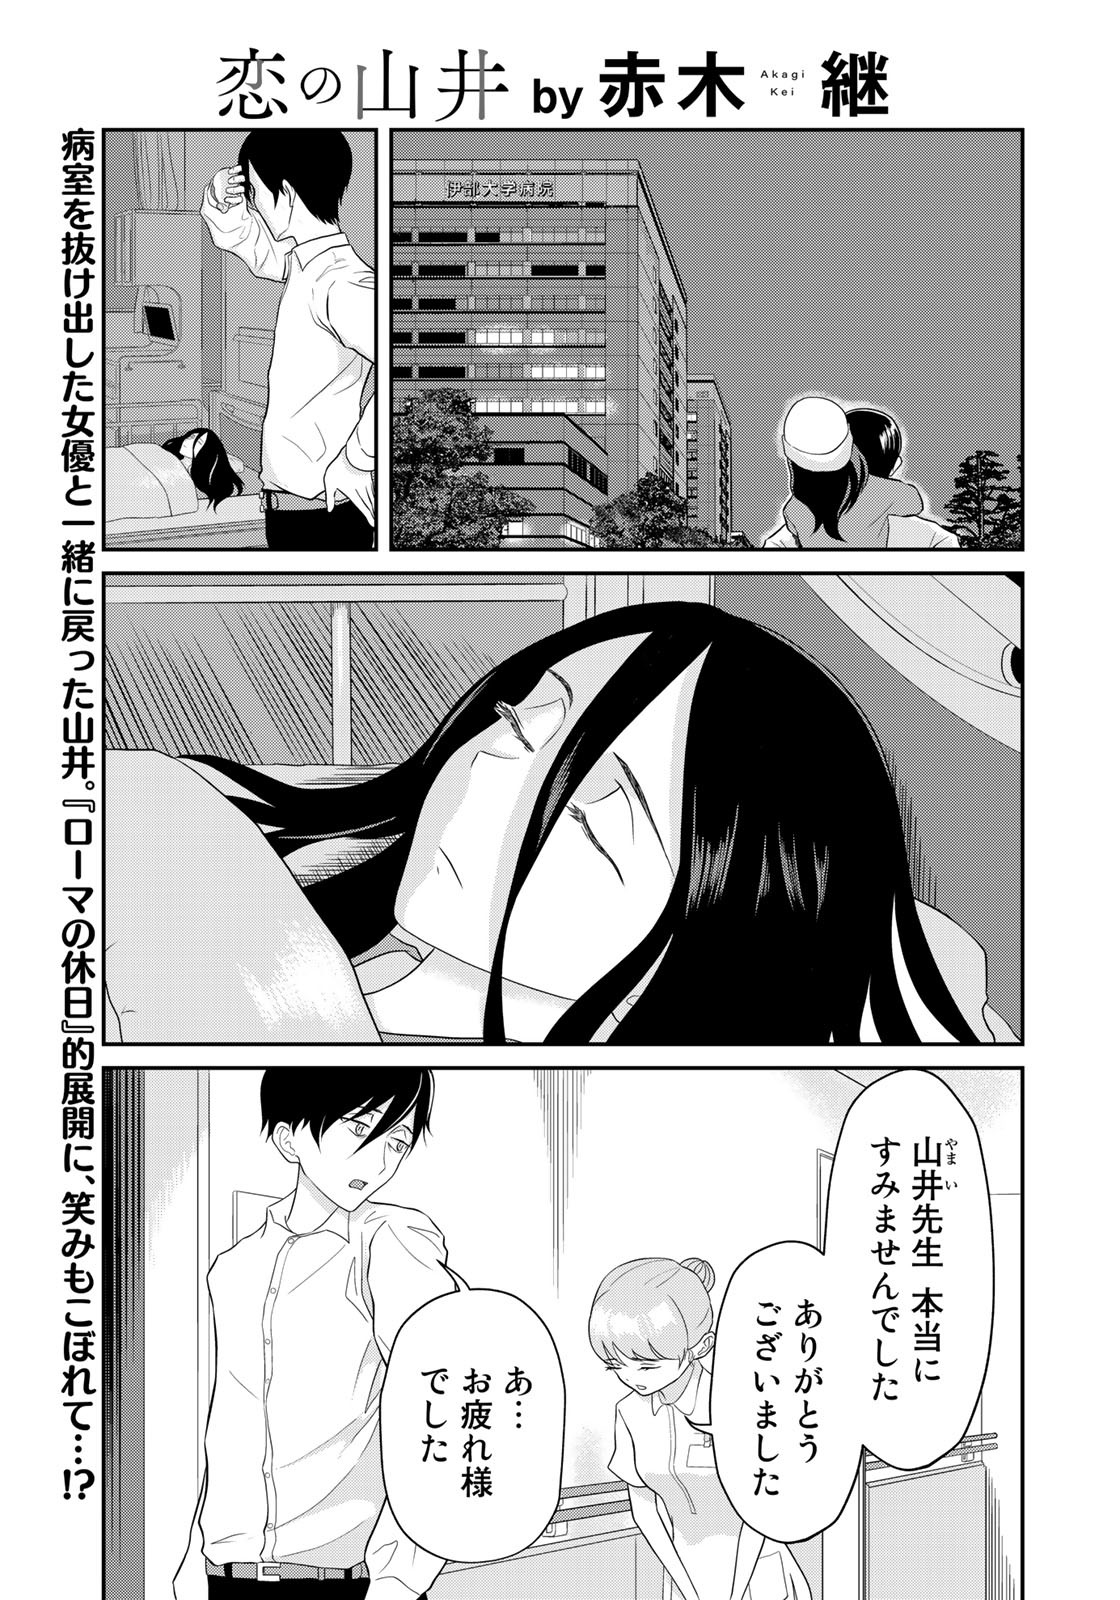 Koi no Yamai (AKAGI Kei) - Chapter 3 - Page 1